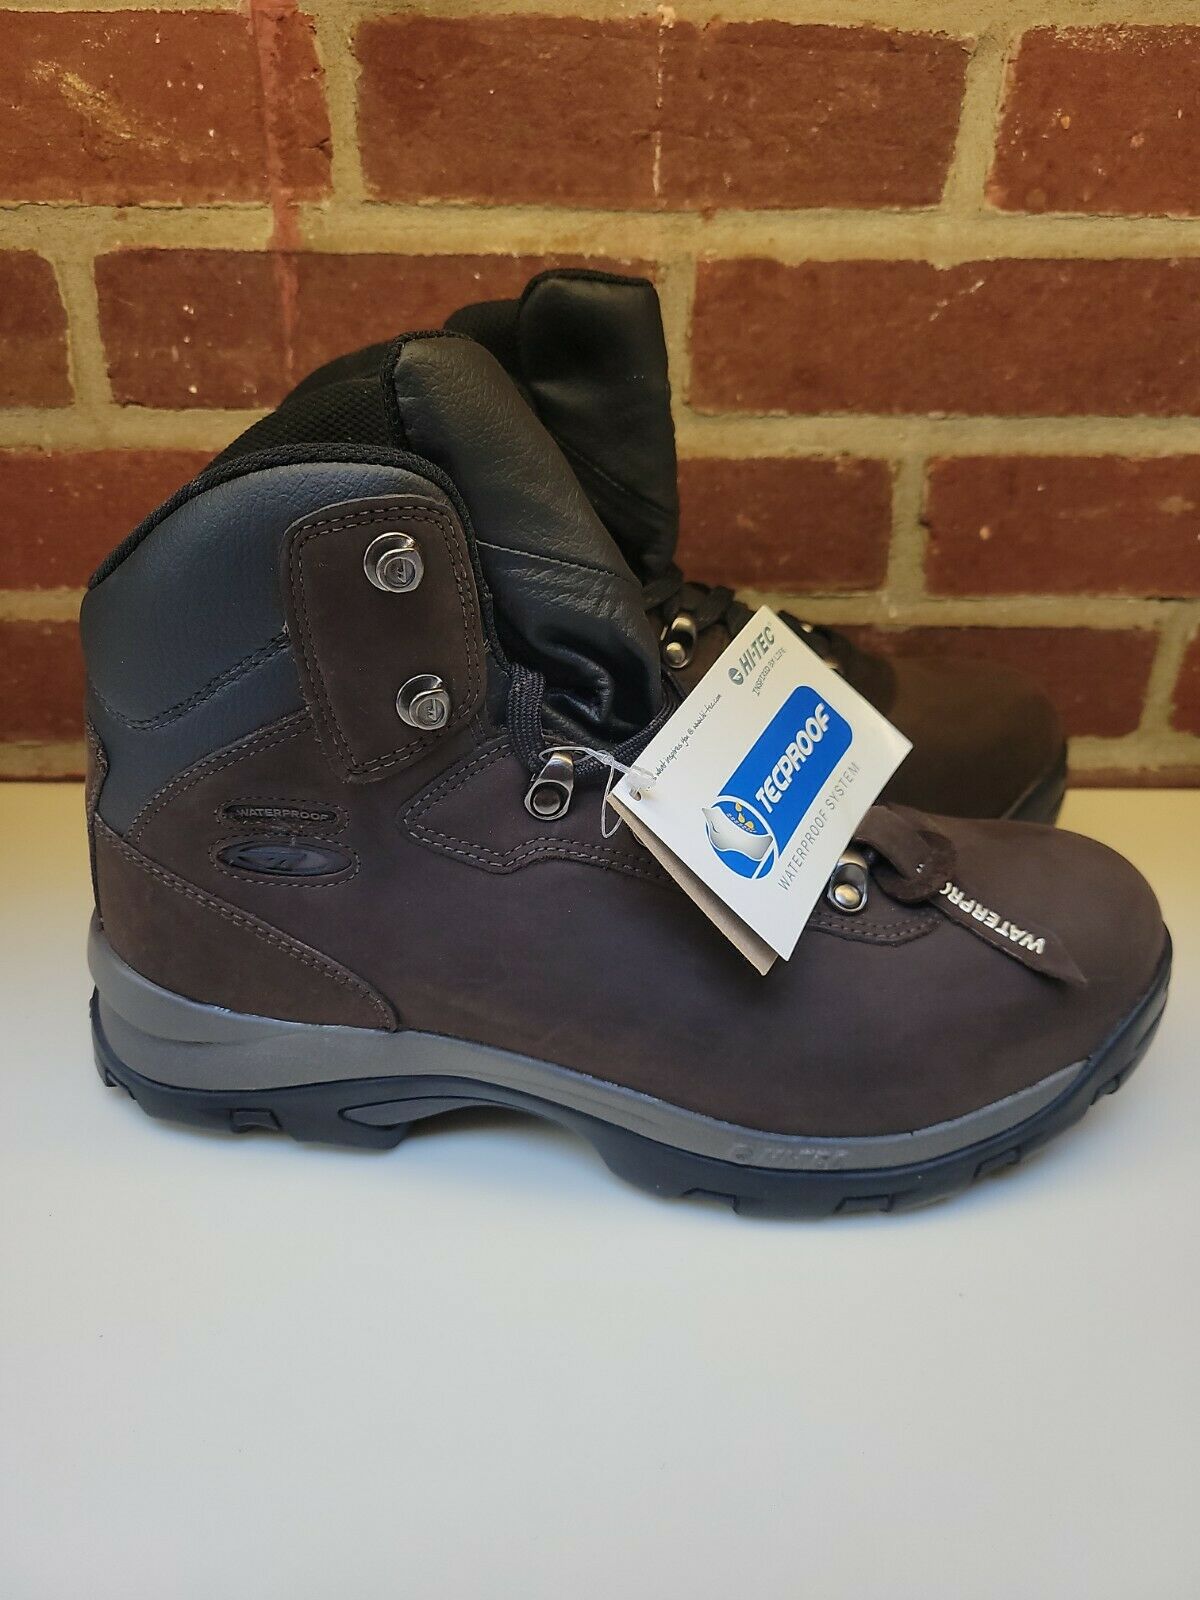 Hi-Tec Men's Altitude IV Waterproof Hiking Boot Dark Chocolate Size 10.5 US